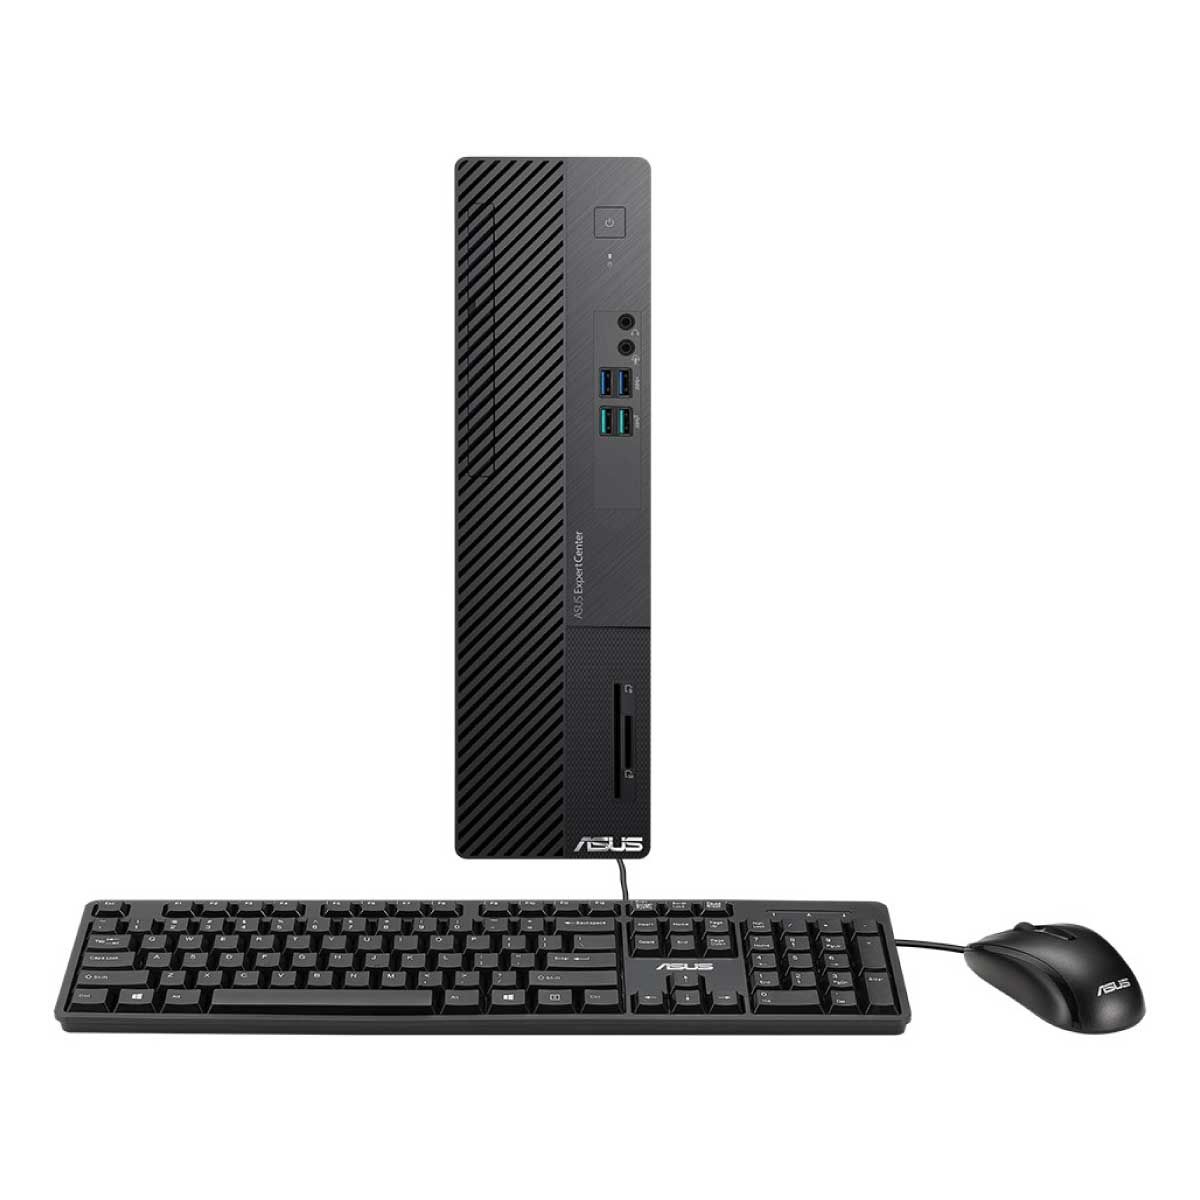 DESKTOP PC (คอมพิวเตอร์ตั้งโต๊ะ) ASUS S500SD-312100048W